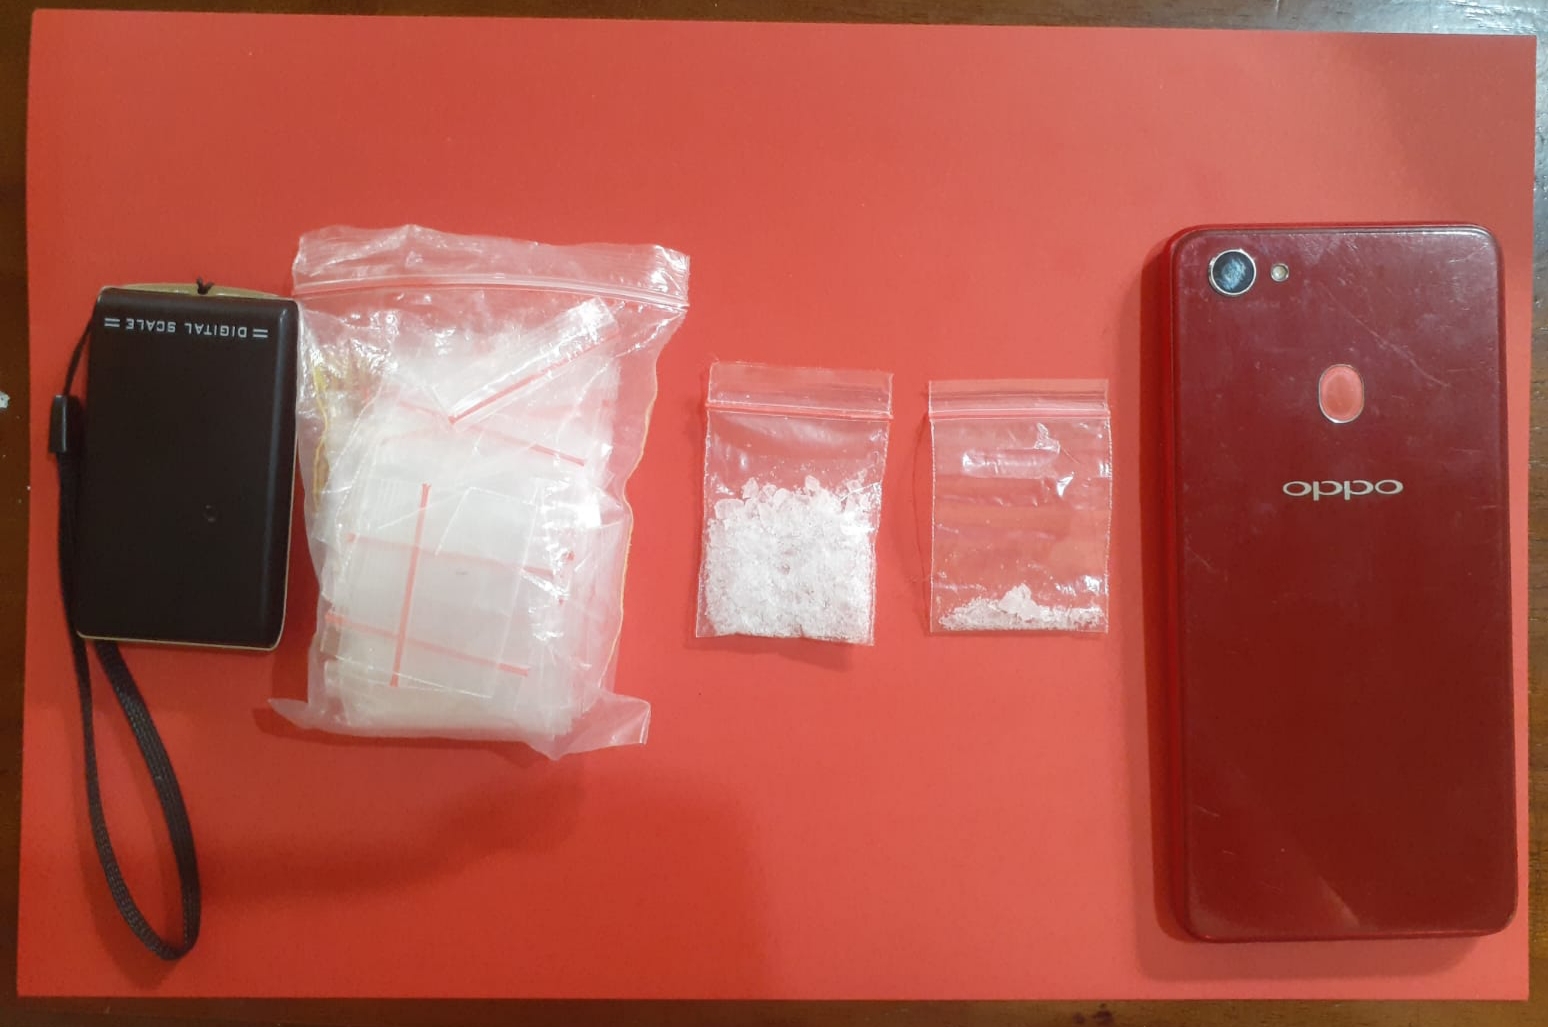 Barang bukti narkotika jenis sabu seberat 2,28 gram dan Handphone